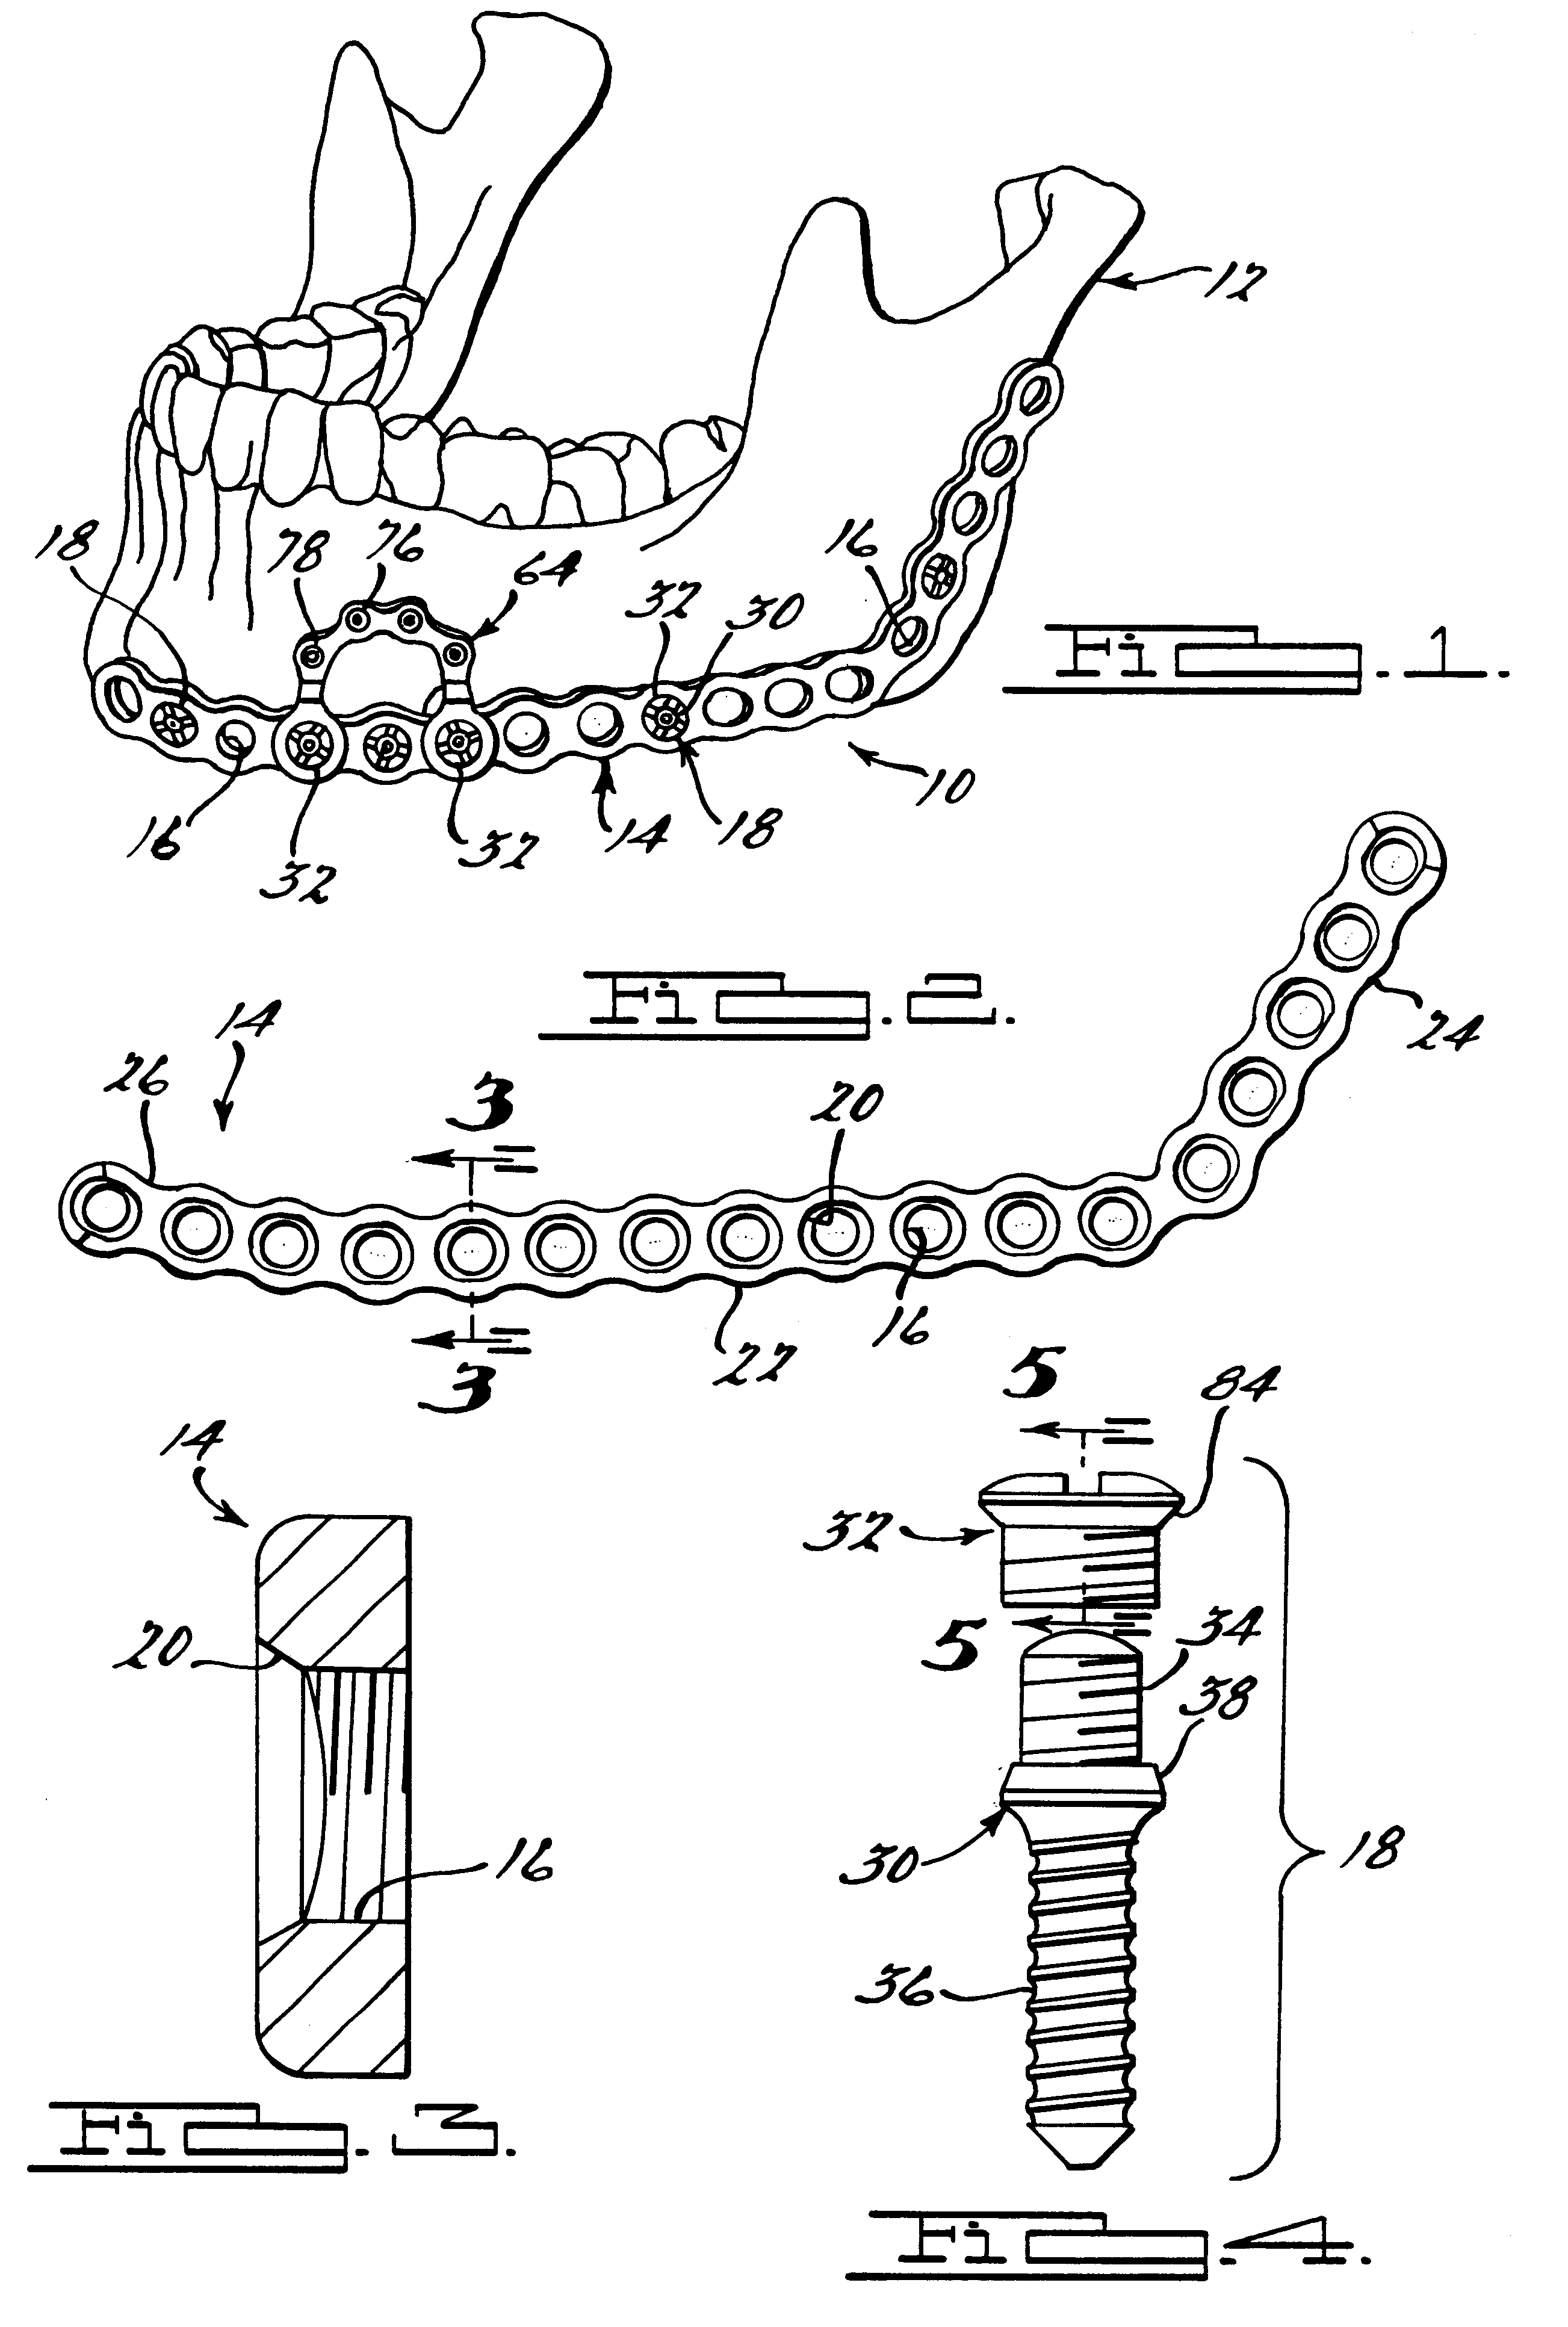 Method and apparatus for mandibular osteosynthesis